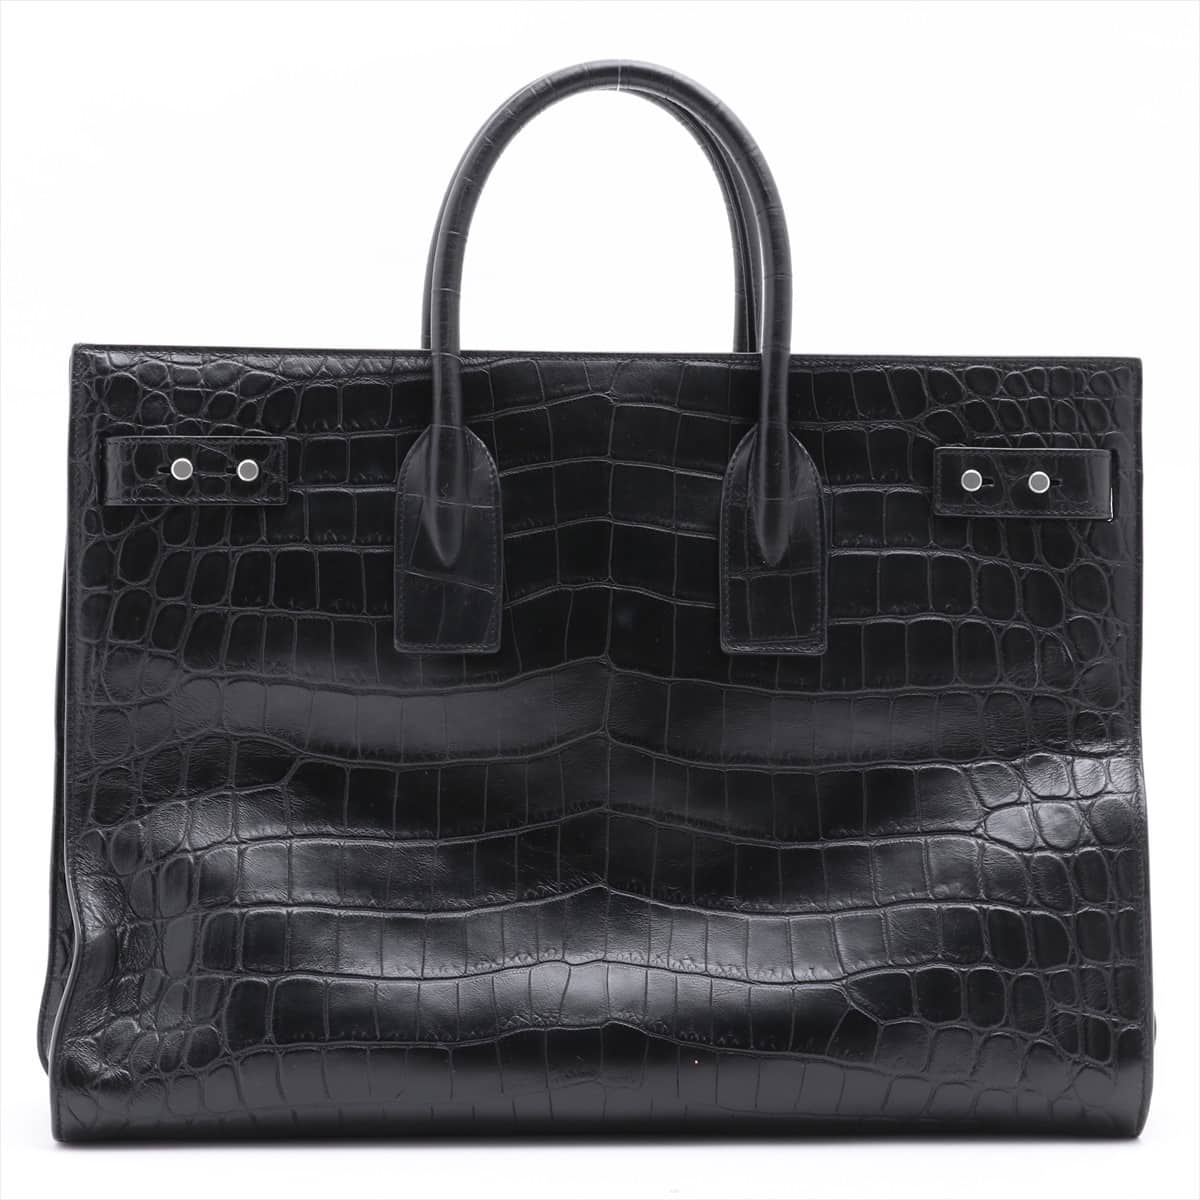 Saint Laurent Paris Sac de Jour Moc croc 2way handbag Black 378299